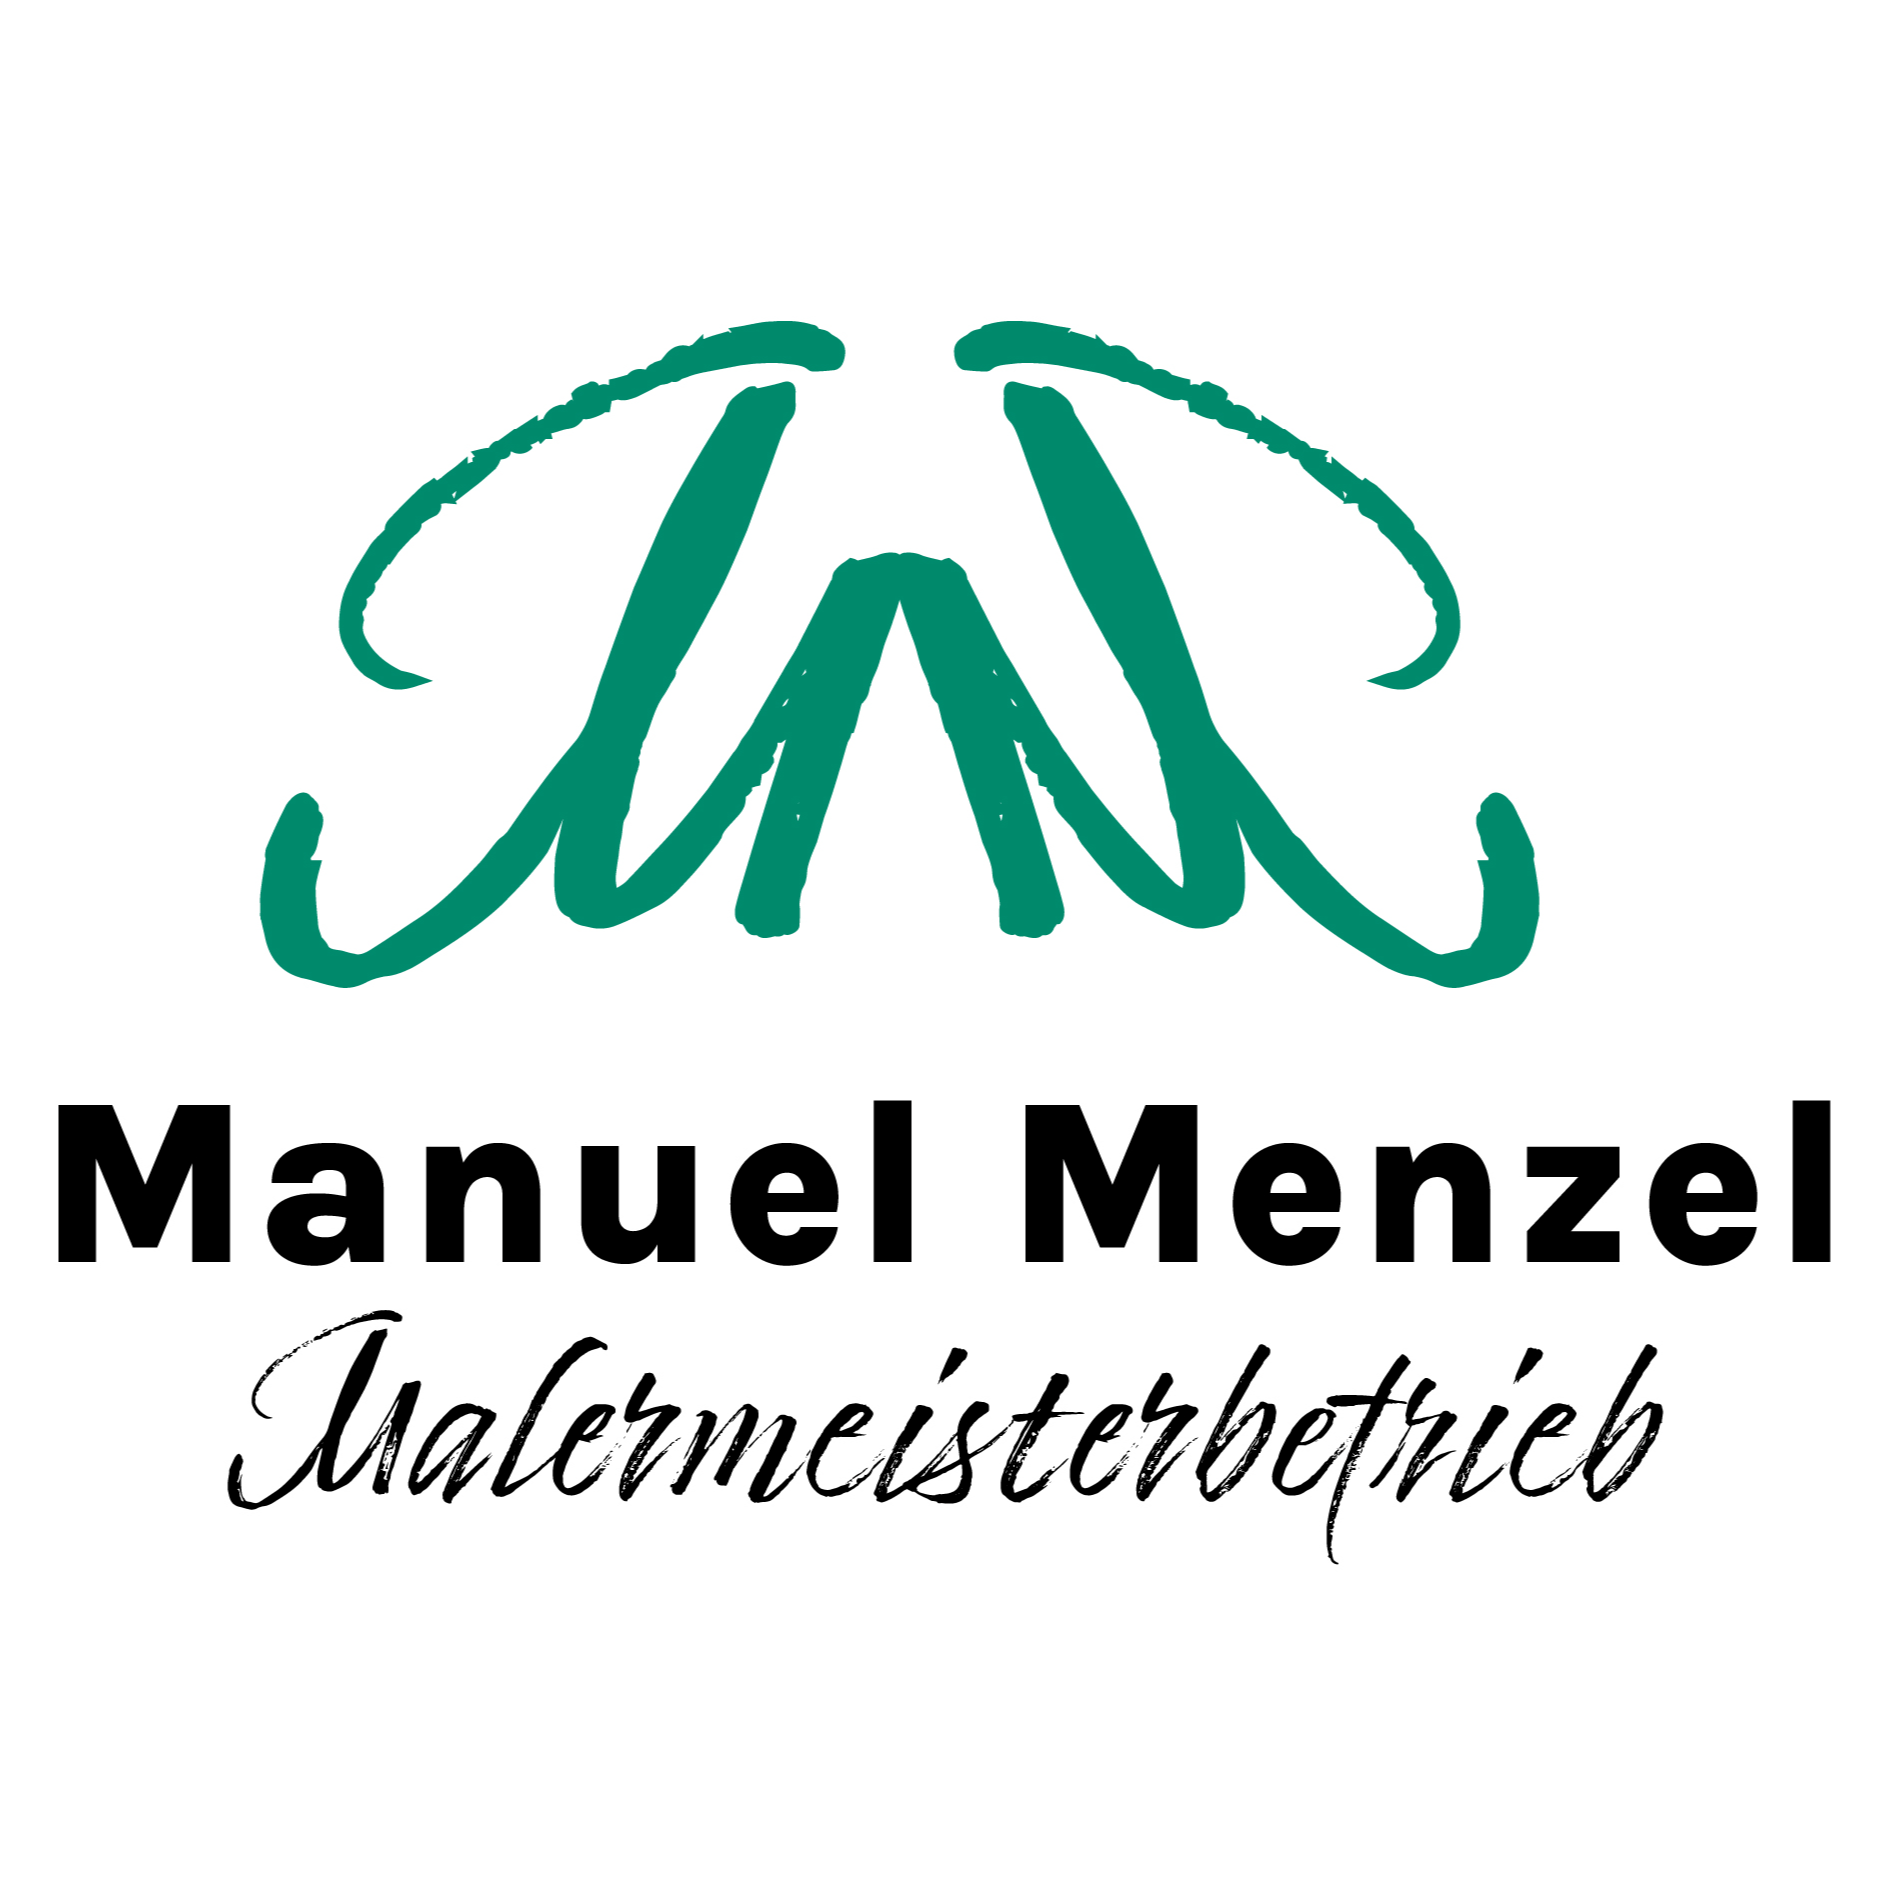 Manuel Menzel Malermeisterbetrieb in Durchhausen - Logo